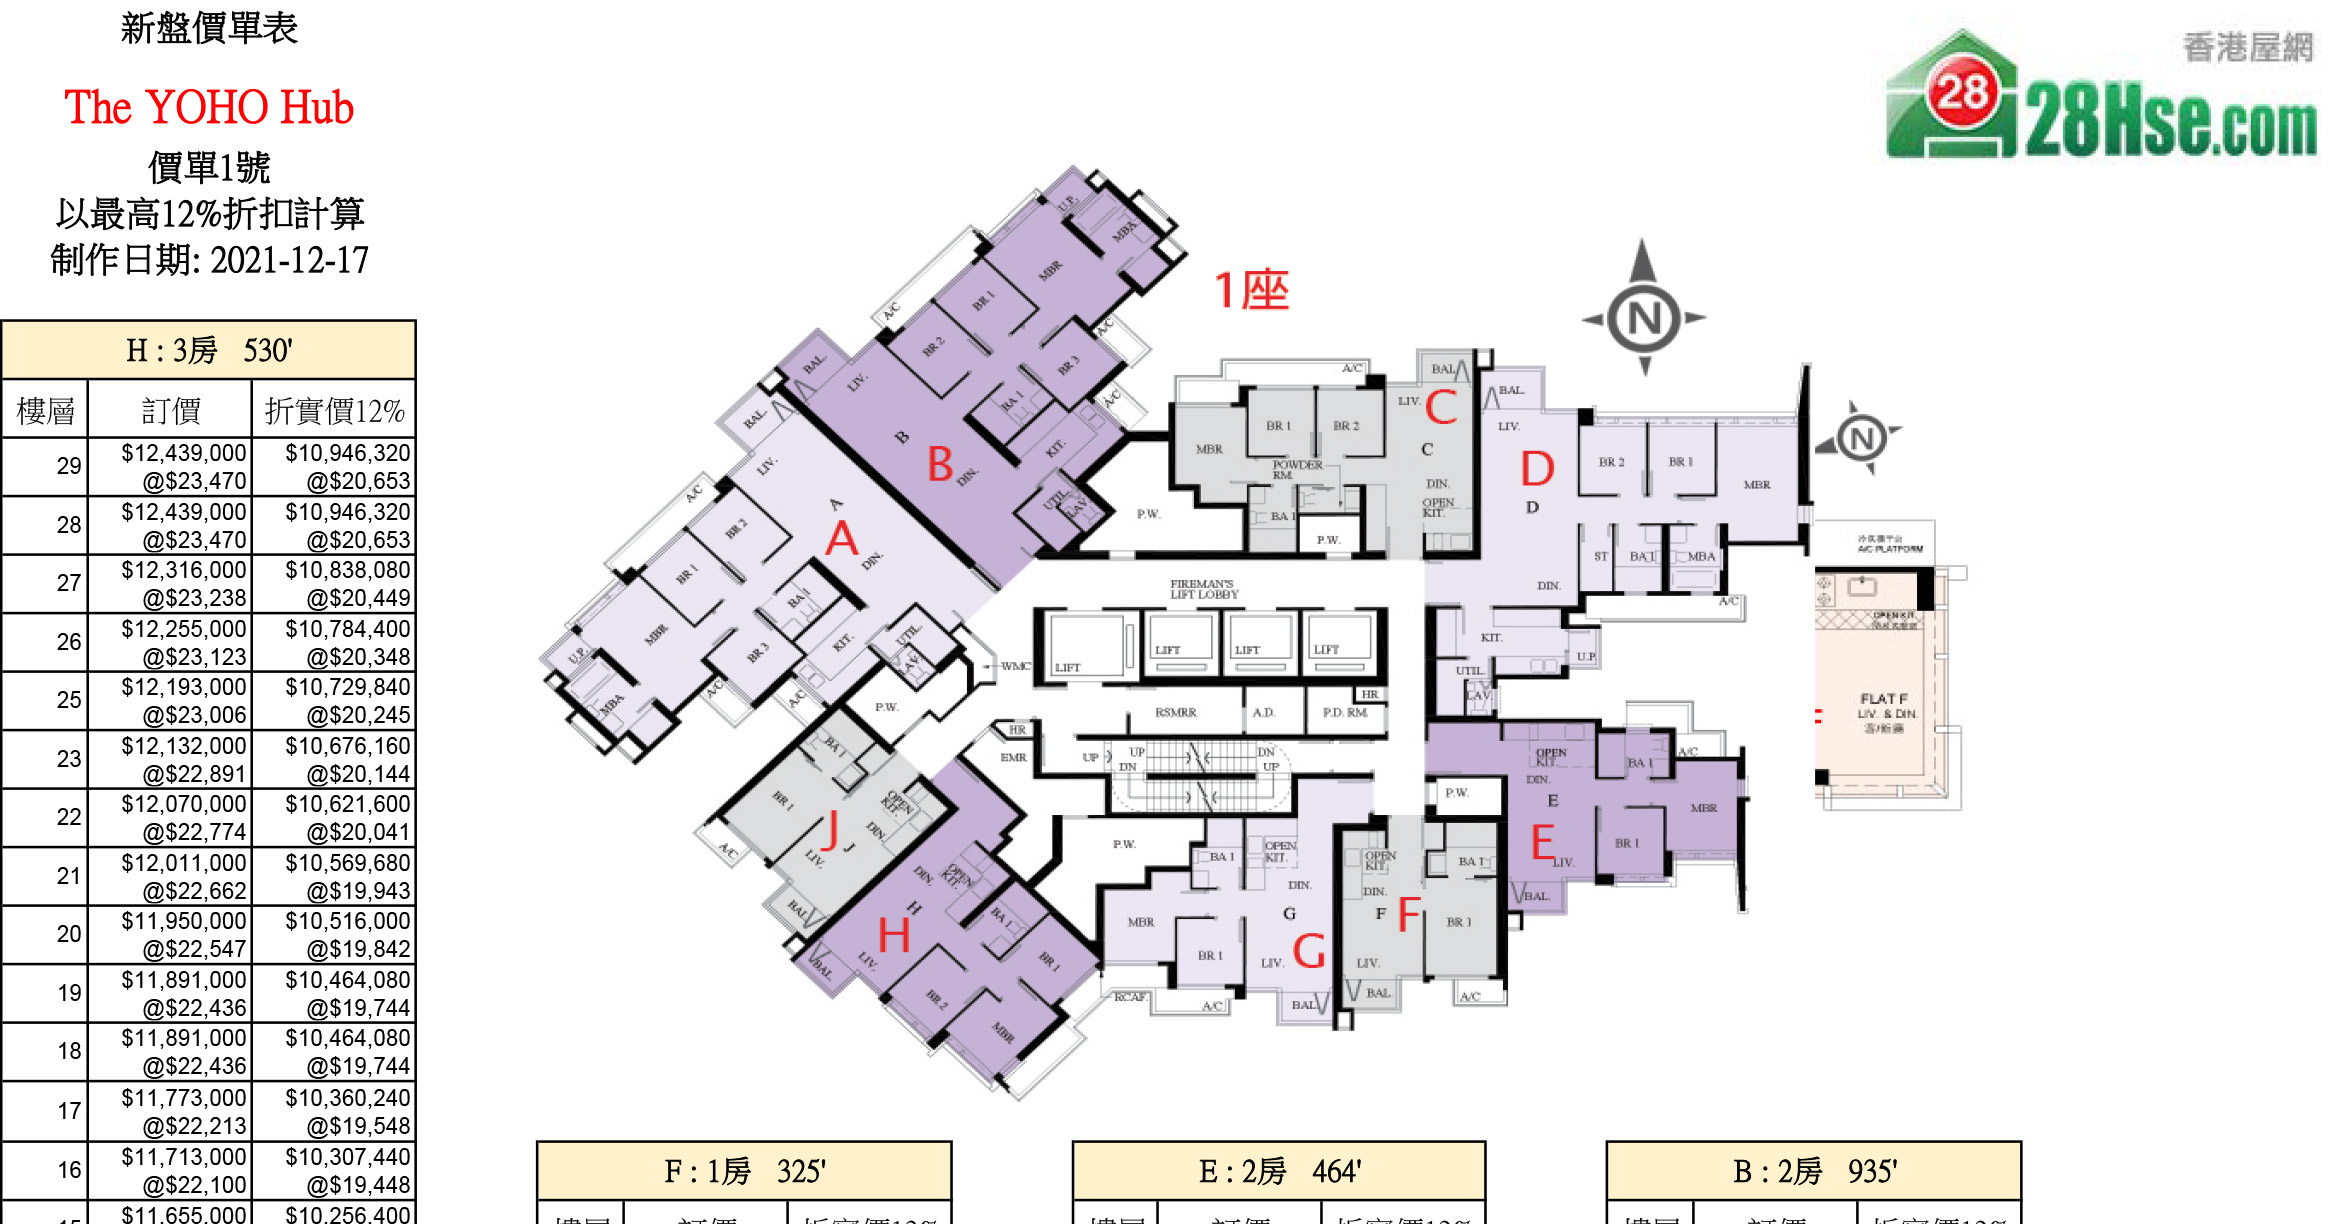 The YOHO Hub Floorplan With Price